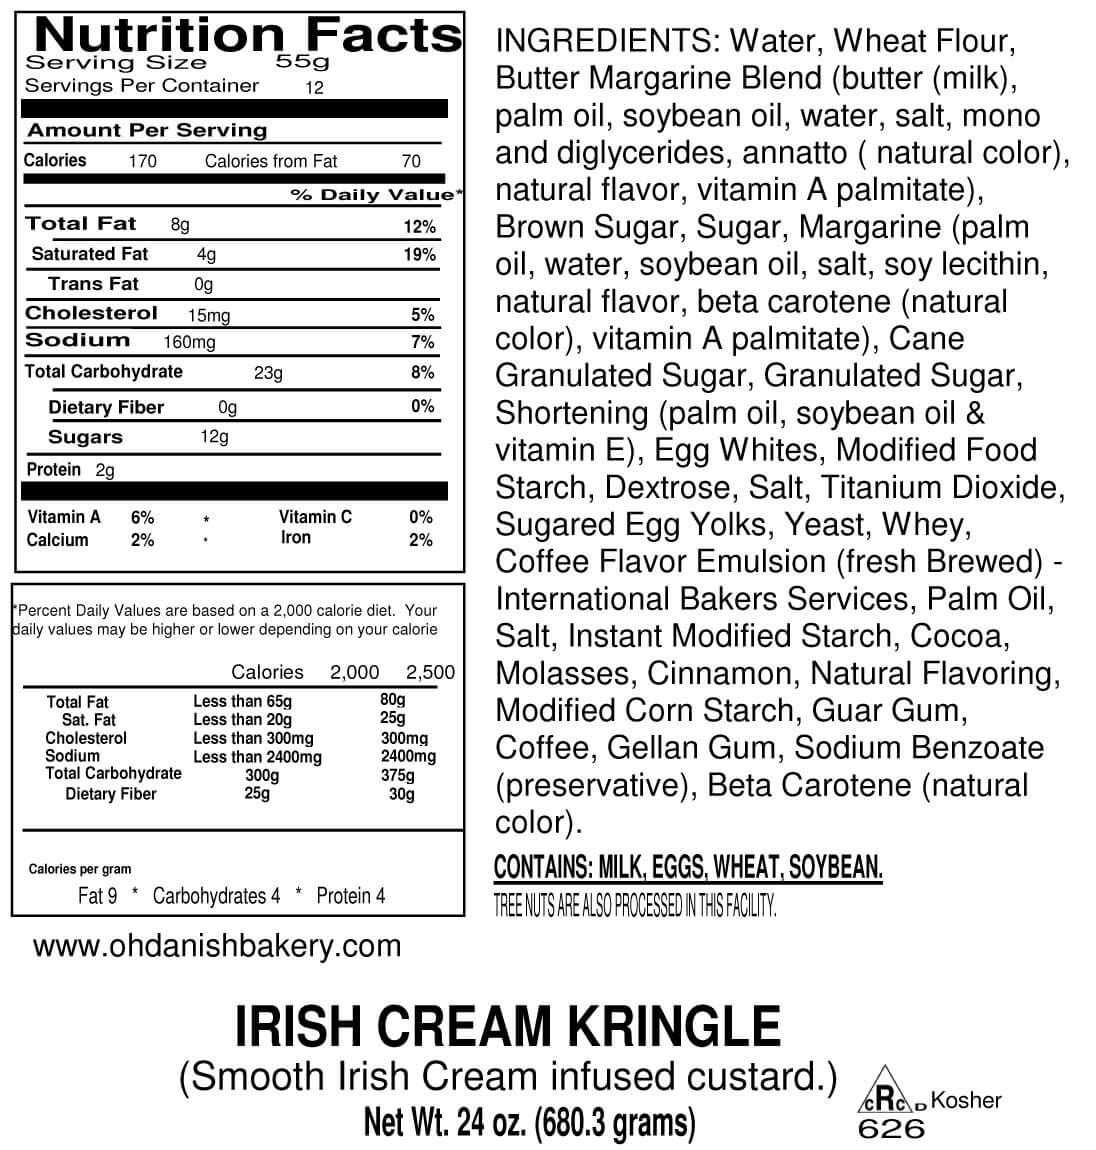 Nutritional Label for Irish Cream Kringle